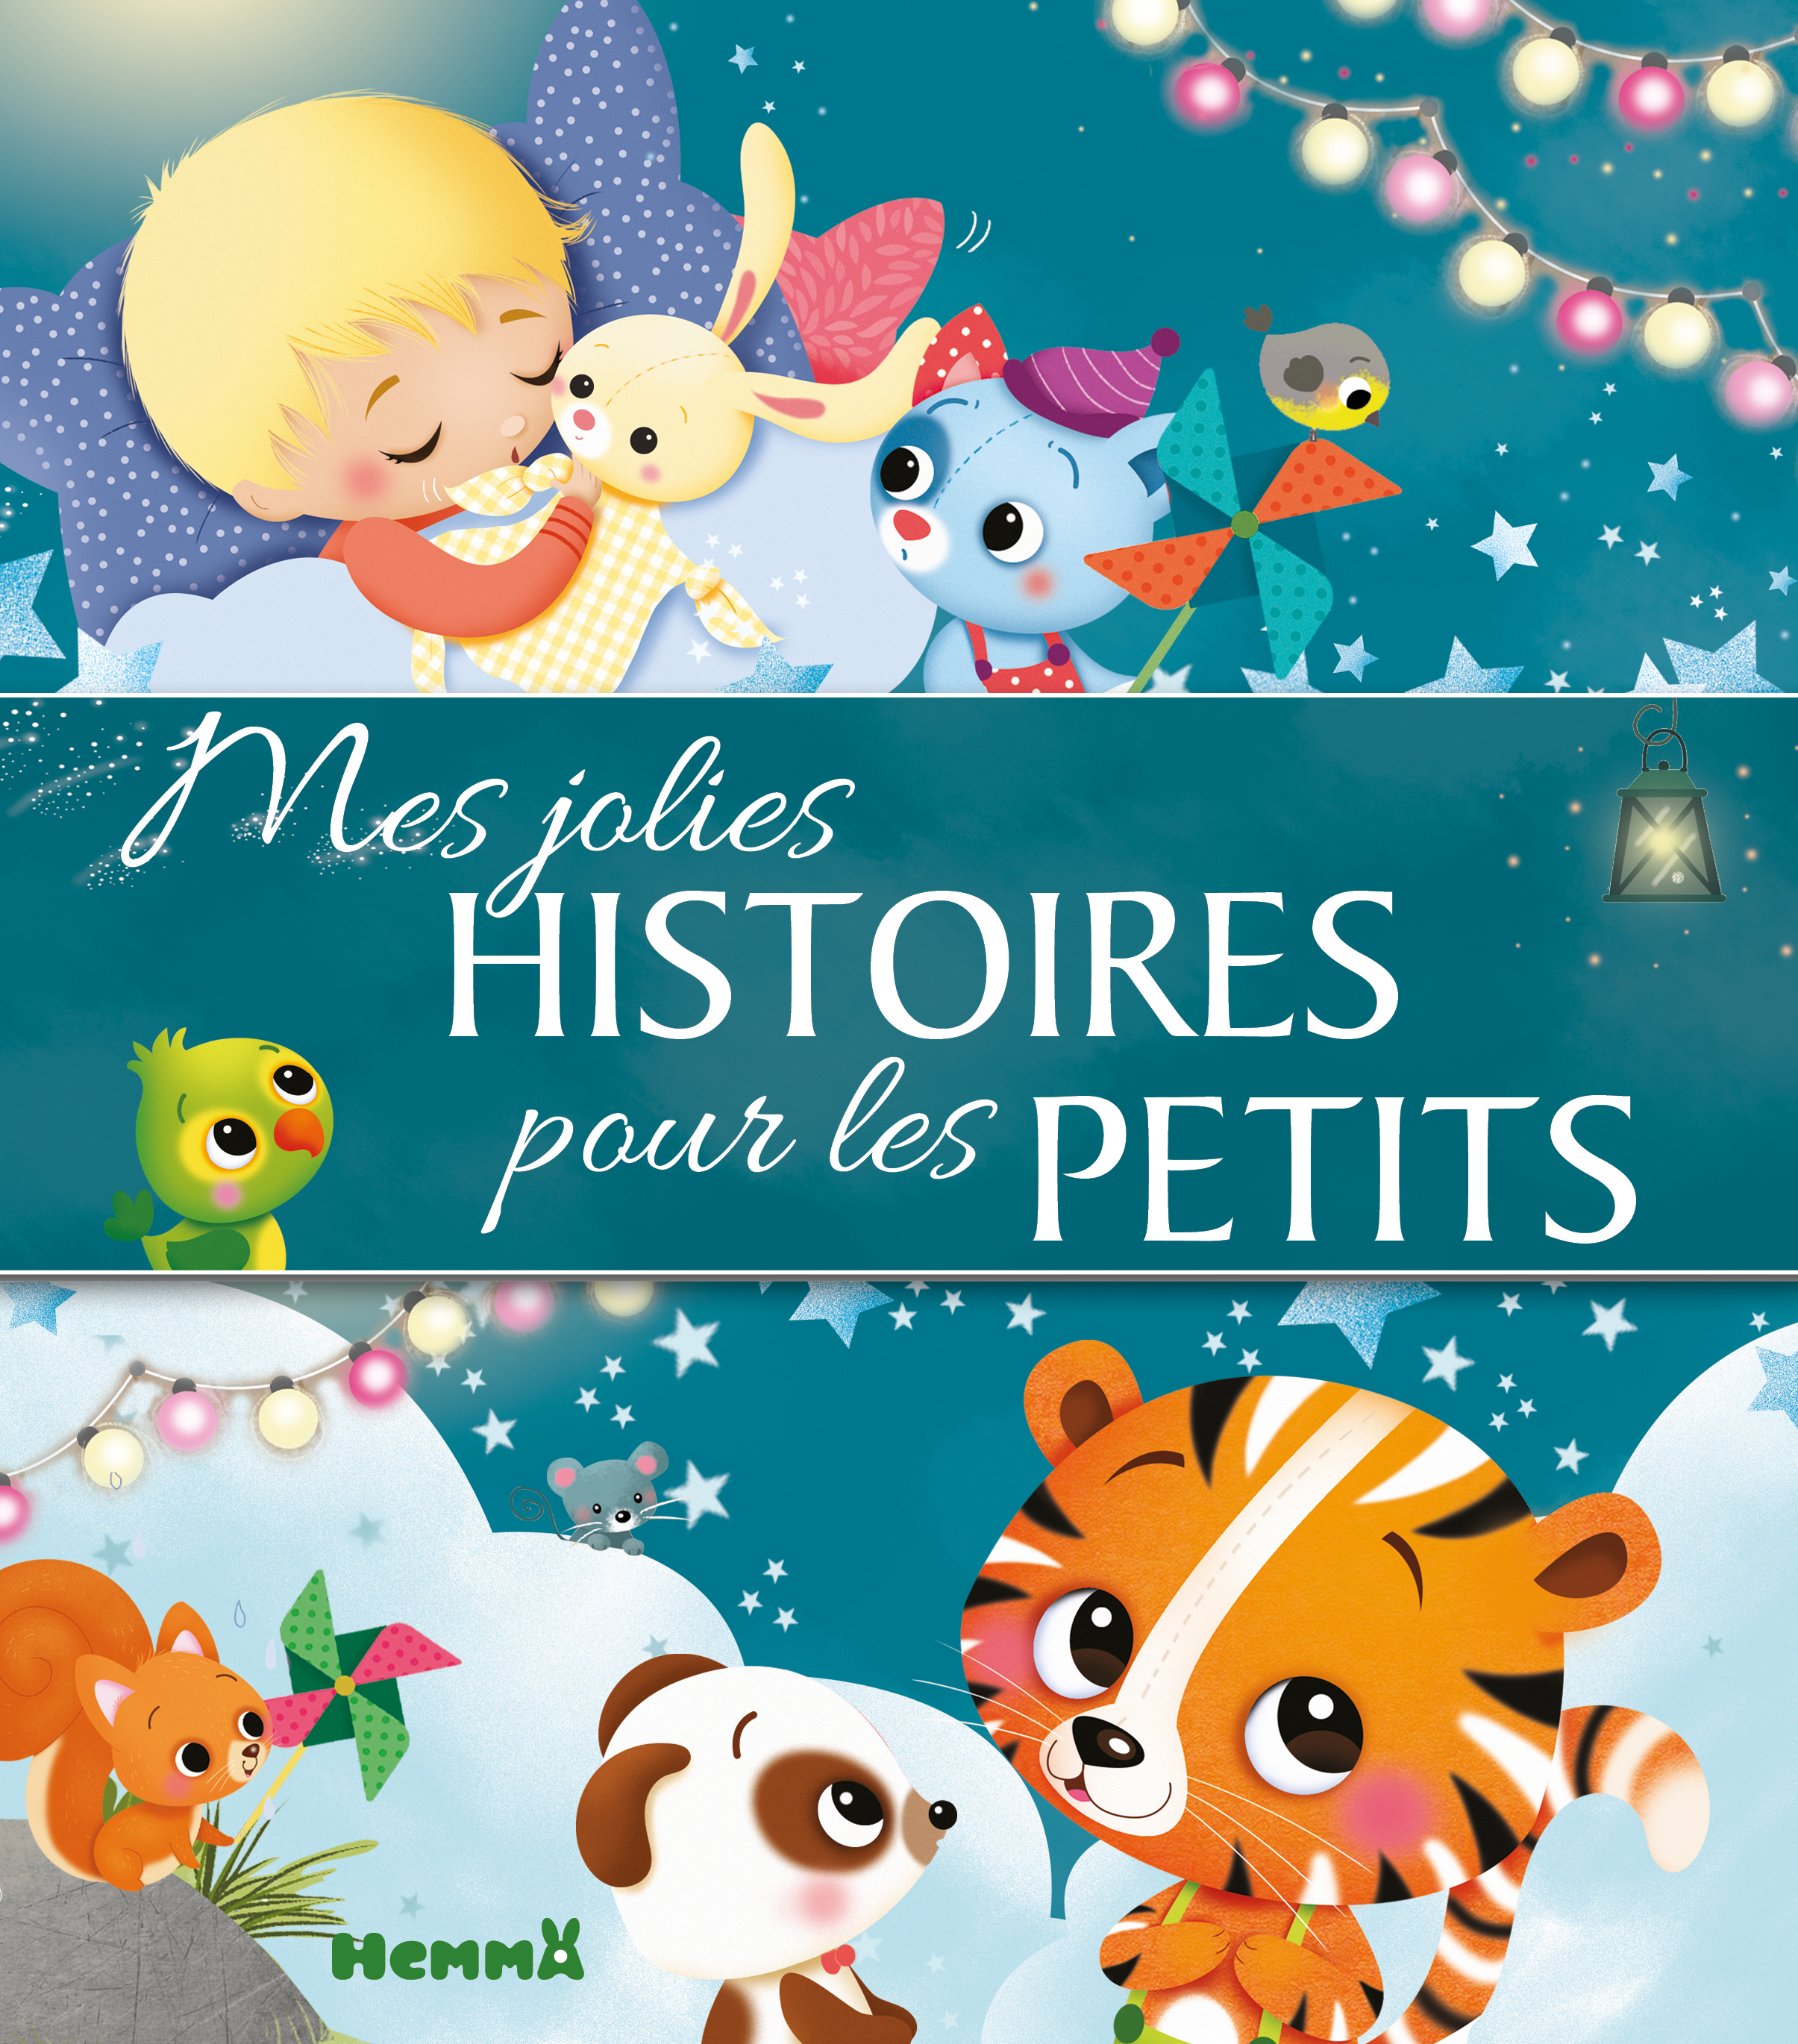 Mes jolies histoires pour les petits / My beautiful stories for the little-ones